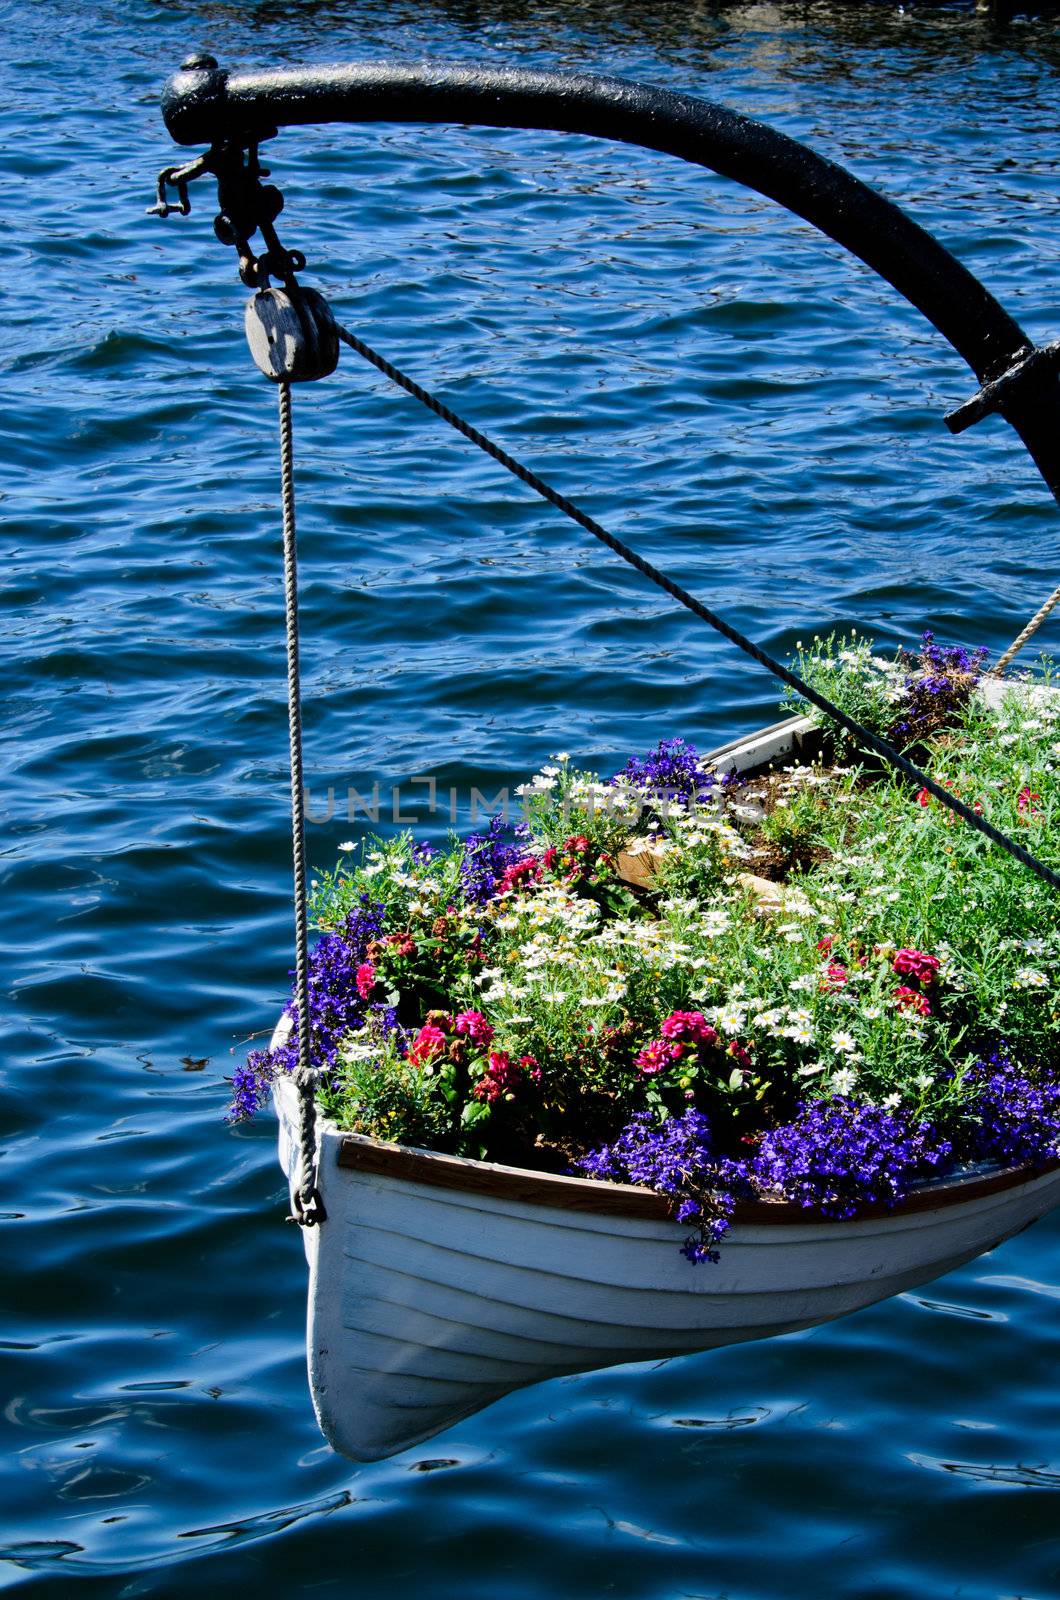 Boat full of decorative flowers